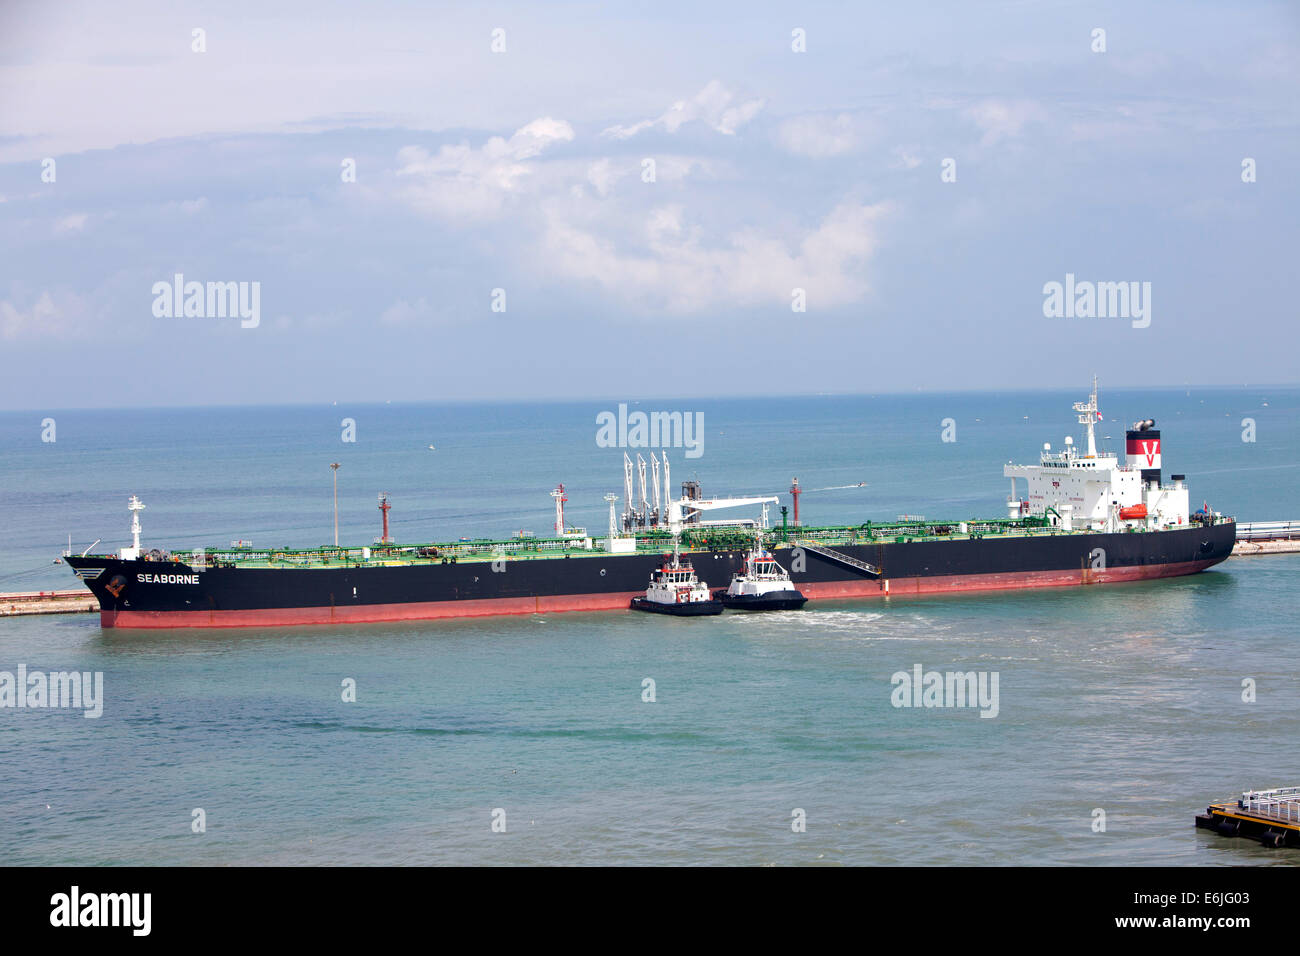 Seaborne Crude Oil Tanker in the port of Gibraltar in the Mediterranean Sea Stock Photo